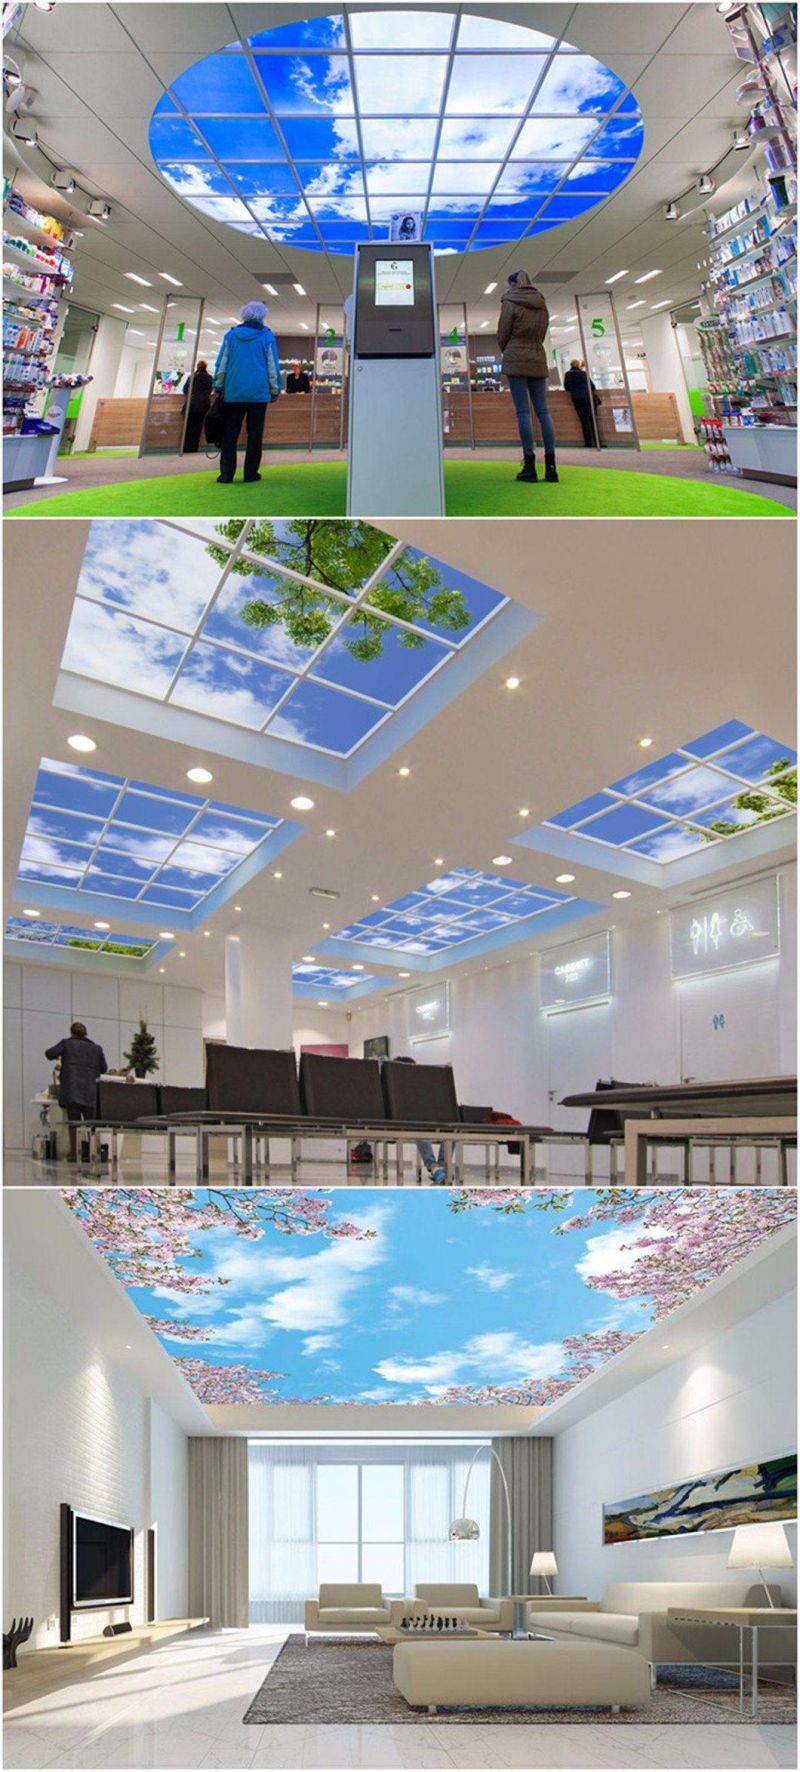 Ra>90 Bluesky/White Clouds Frameless LED Sky Ceiling Panel Light for Home-Use